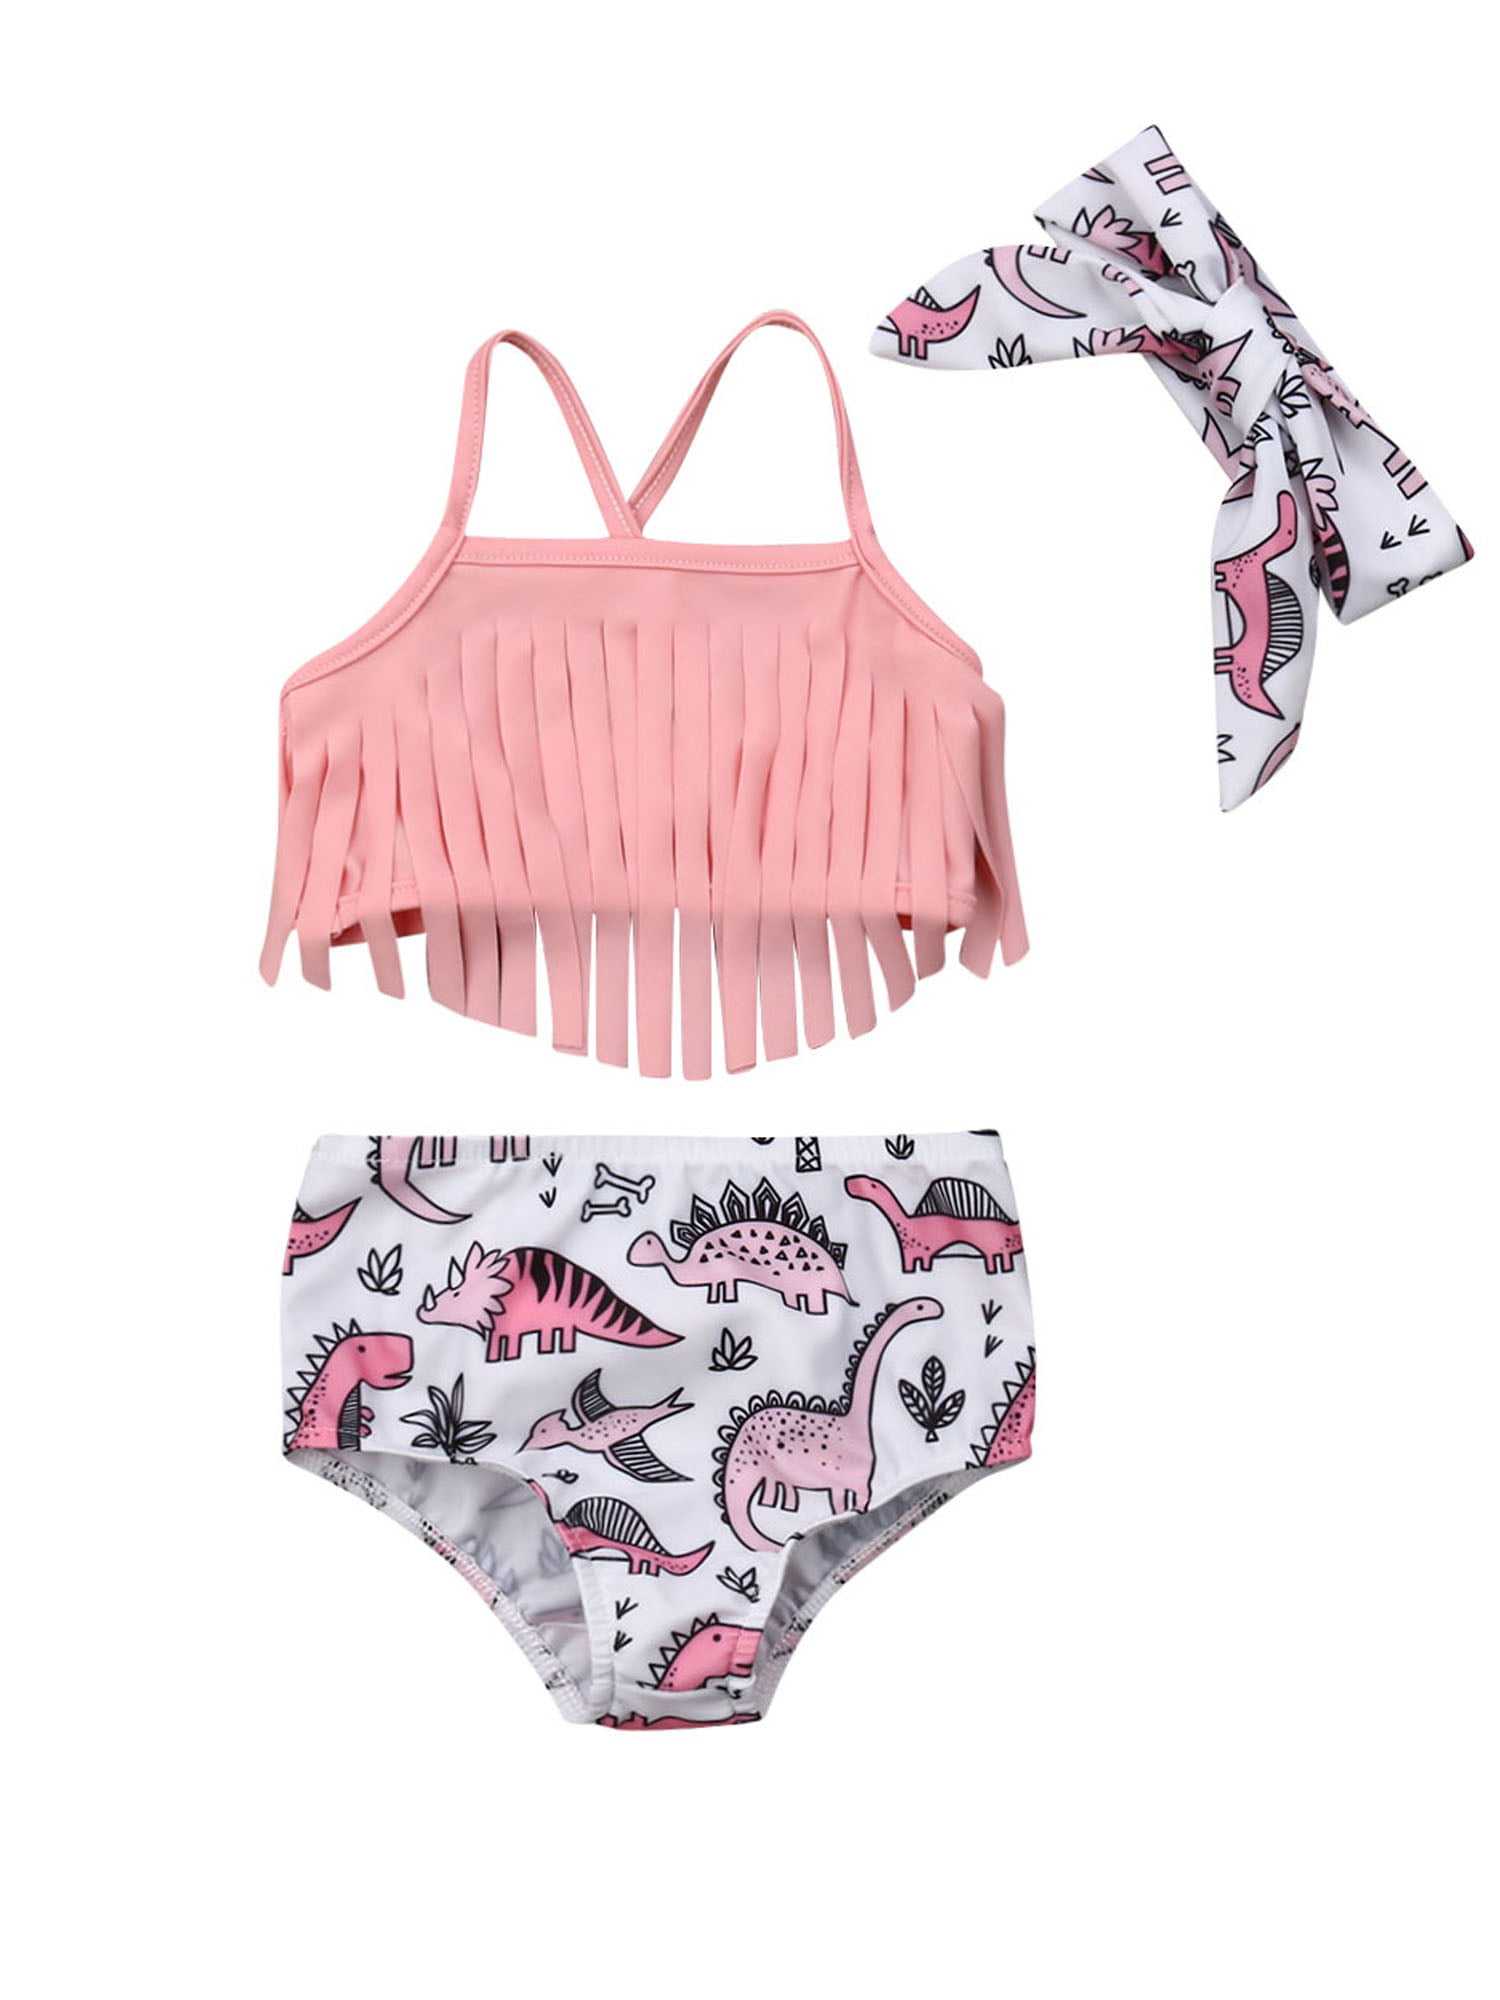 WALLARENEAR Newborn Baby Girls Colorful Dinosaur Sleeveless Swimsuit Strap One-Piece Swimwear Beachwear 